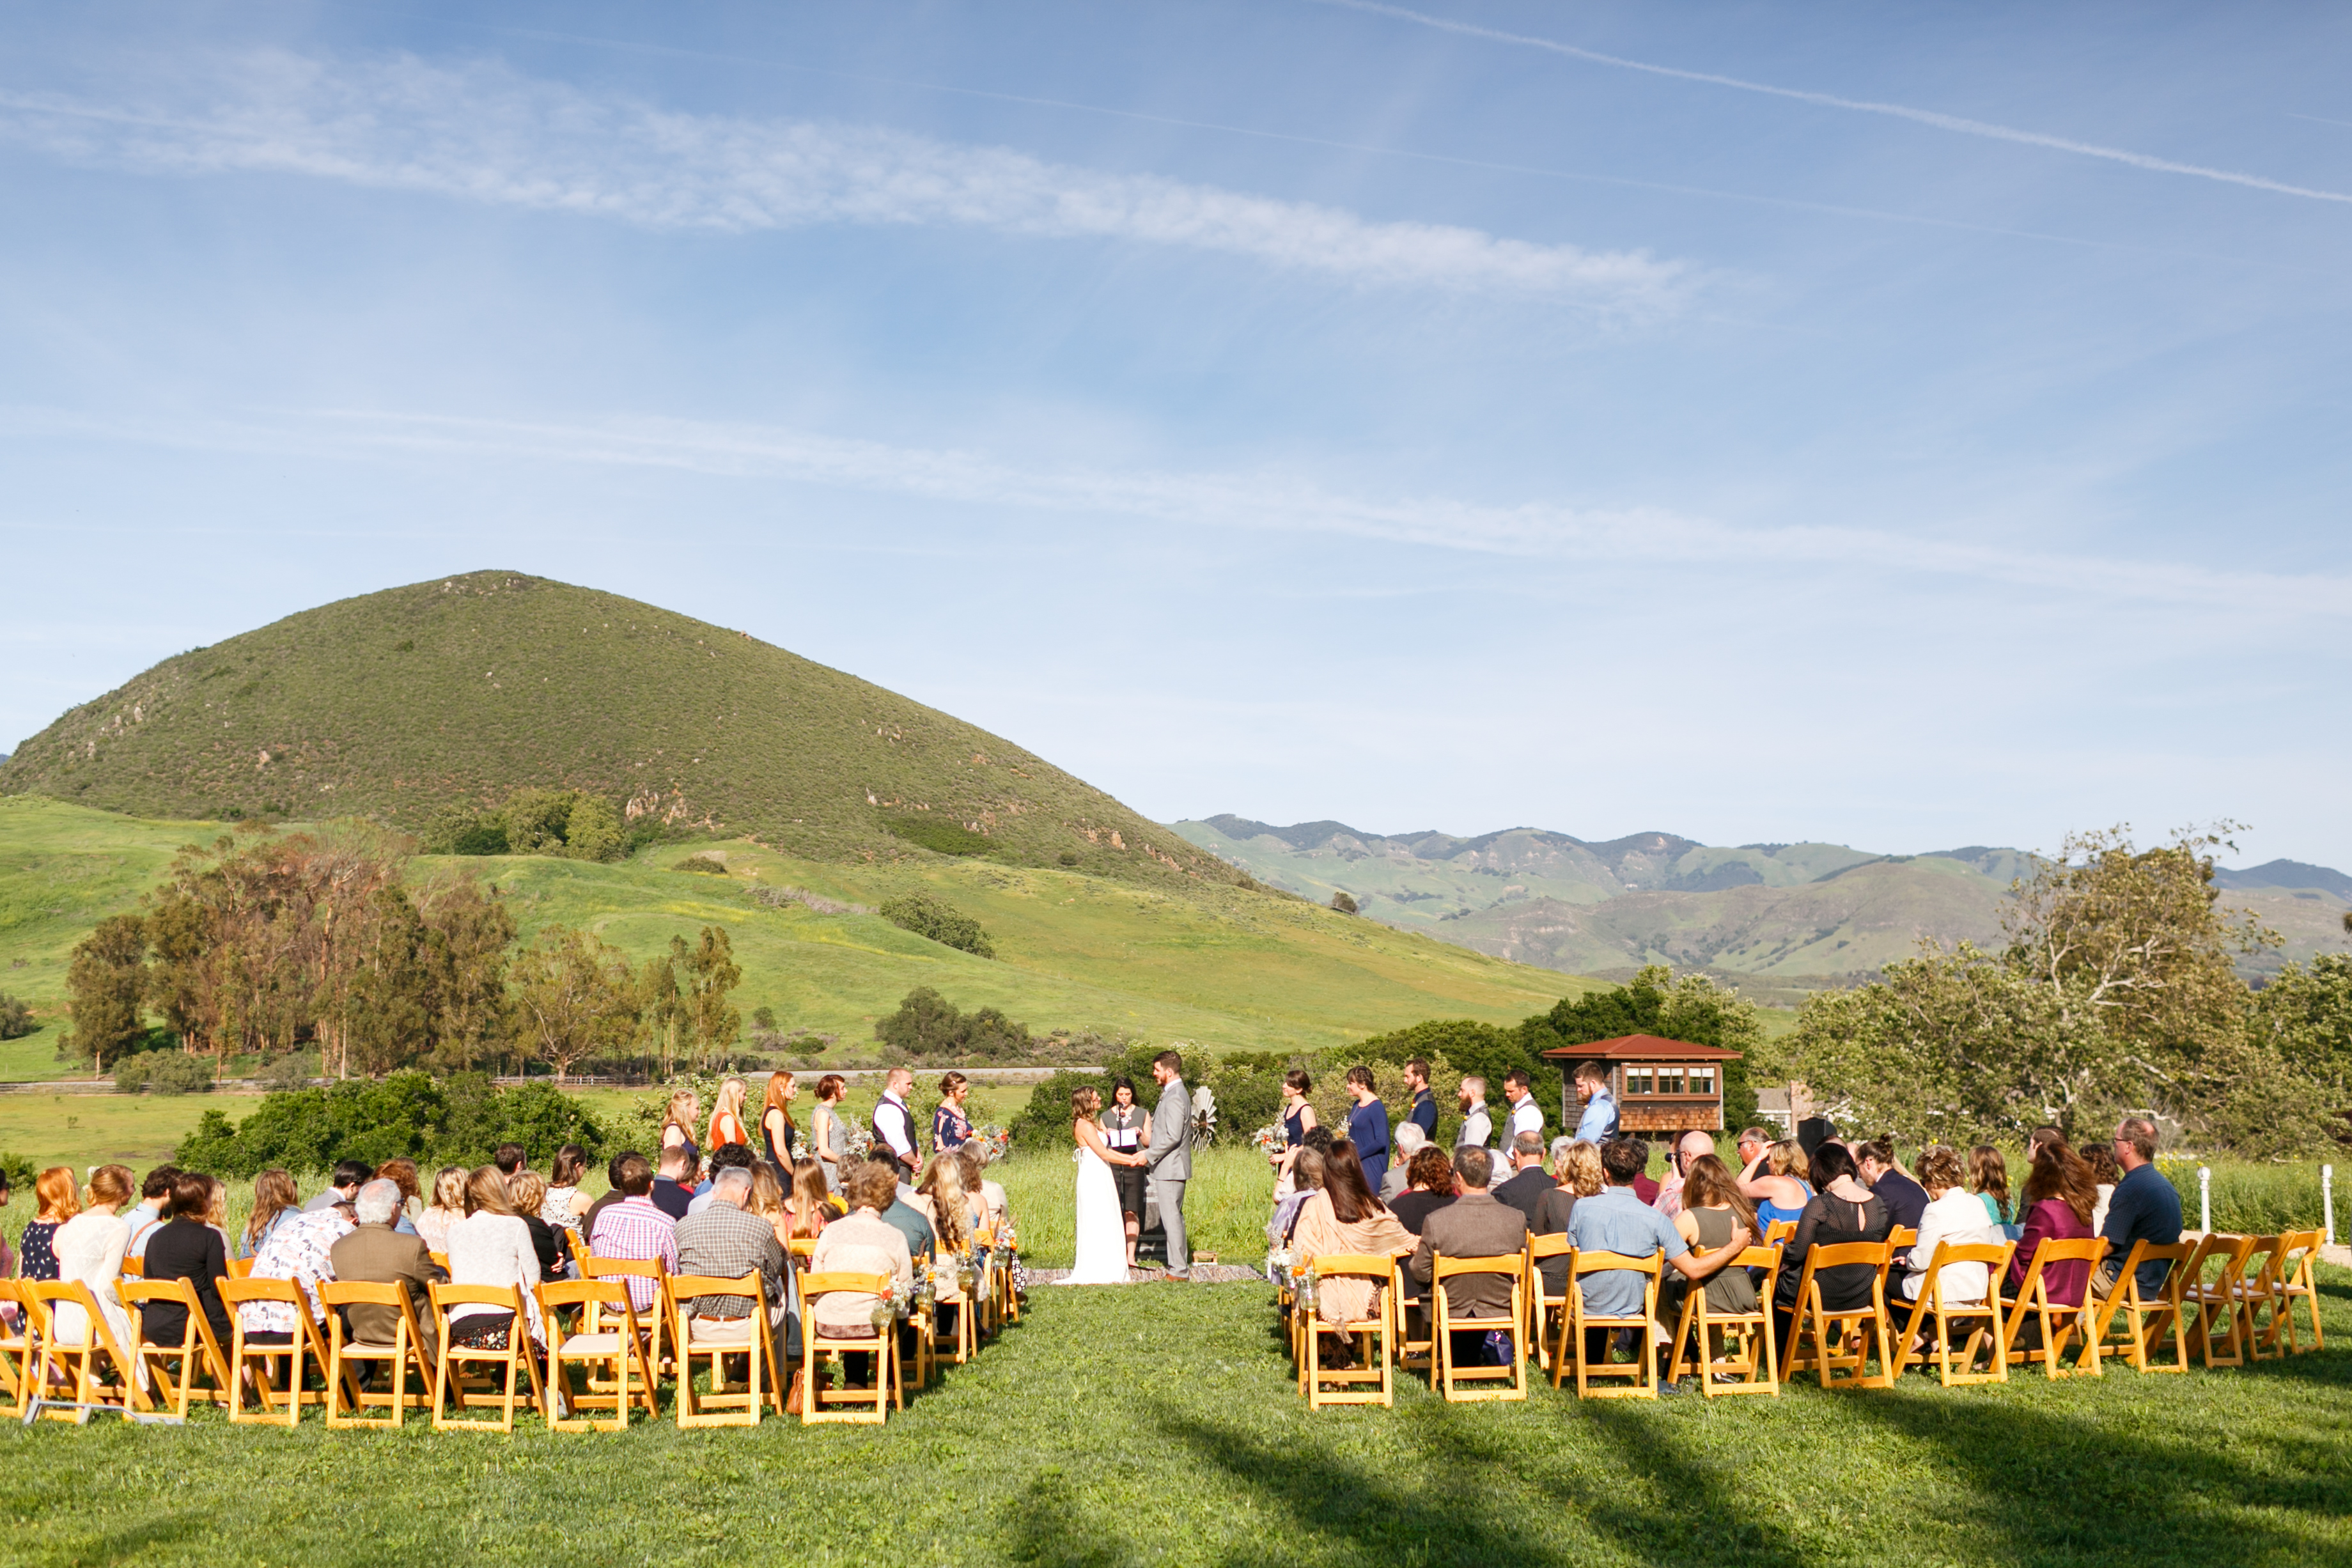 Central Coast Ranch Wedding Venues - Flying Caballos Ranch